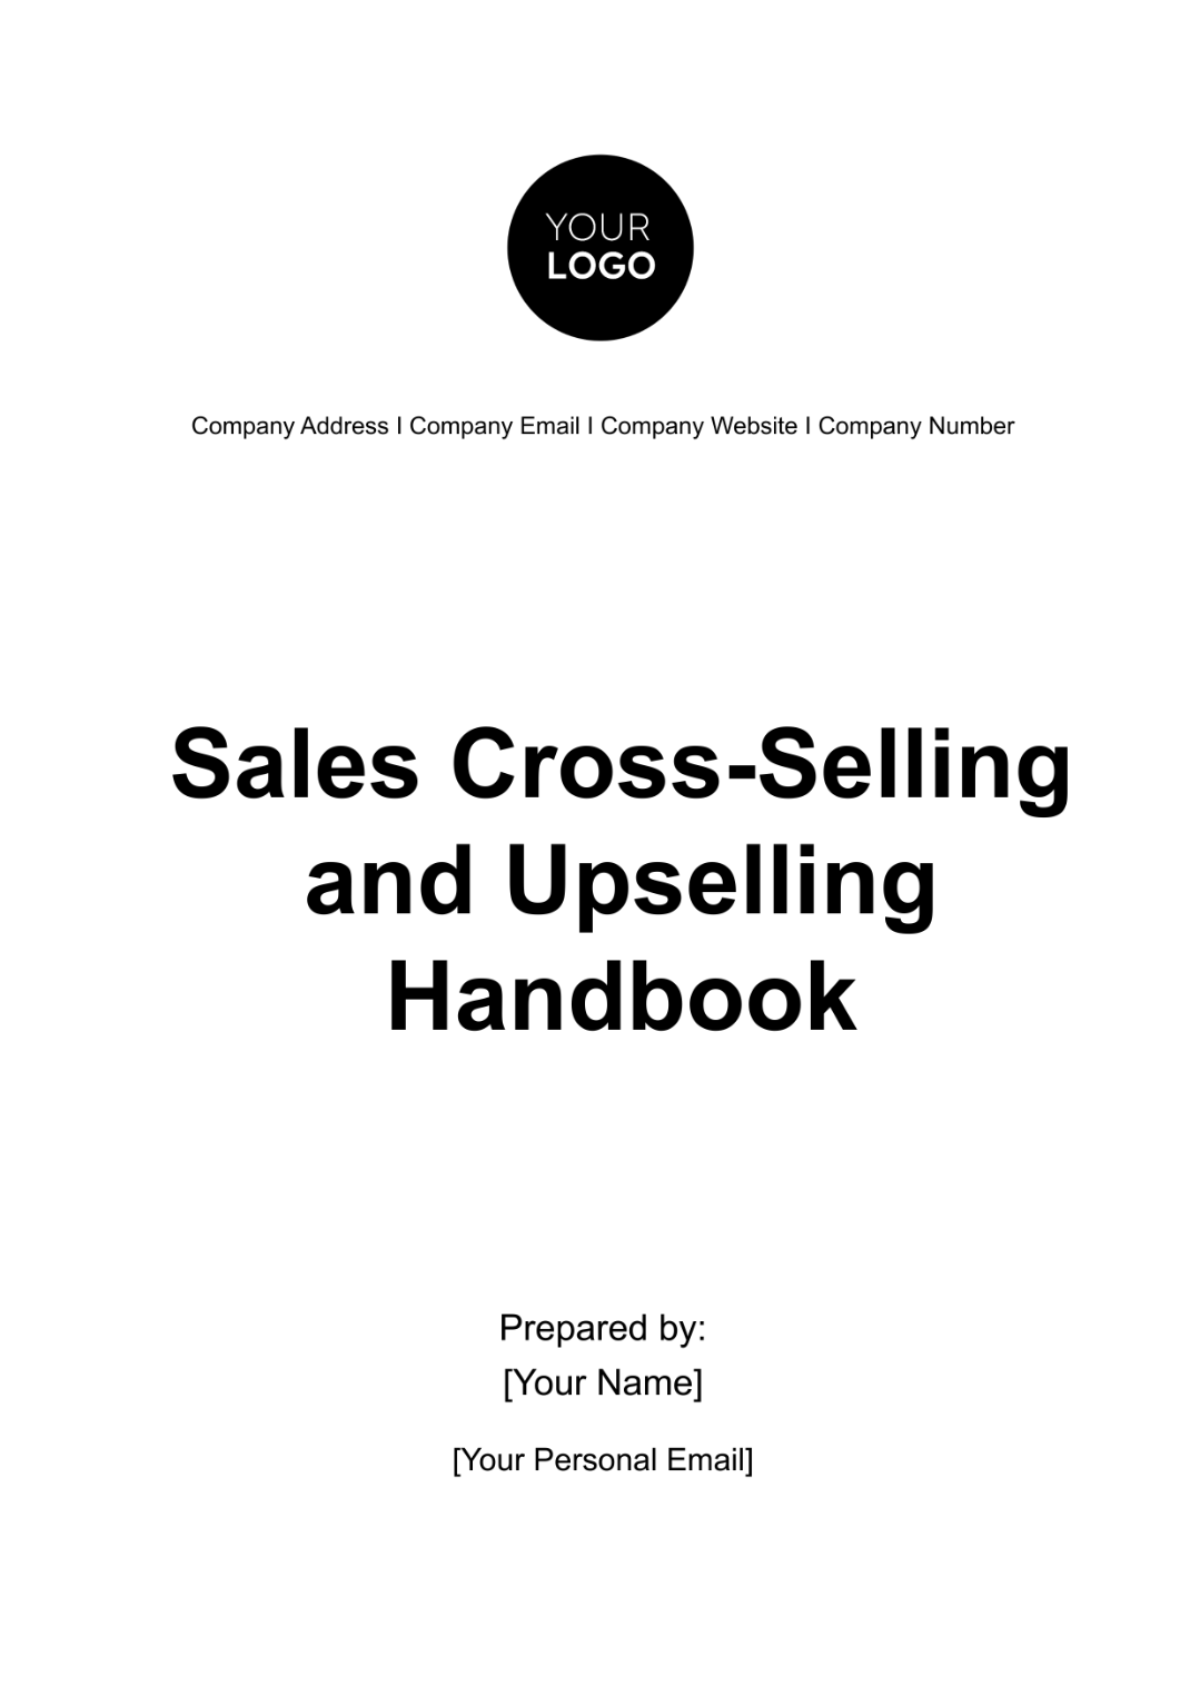 Free Sales Cross-Selling and Upselling Handbook Template